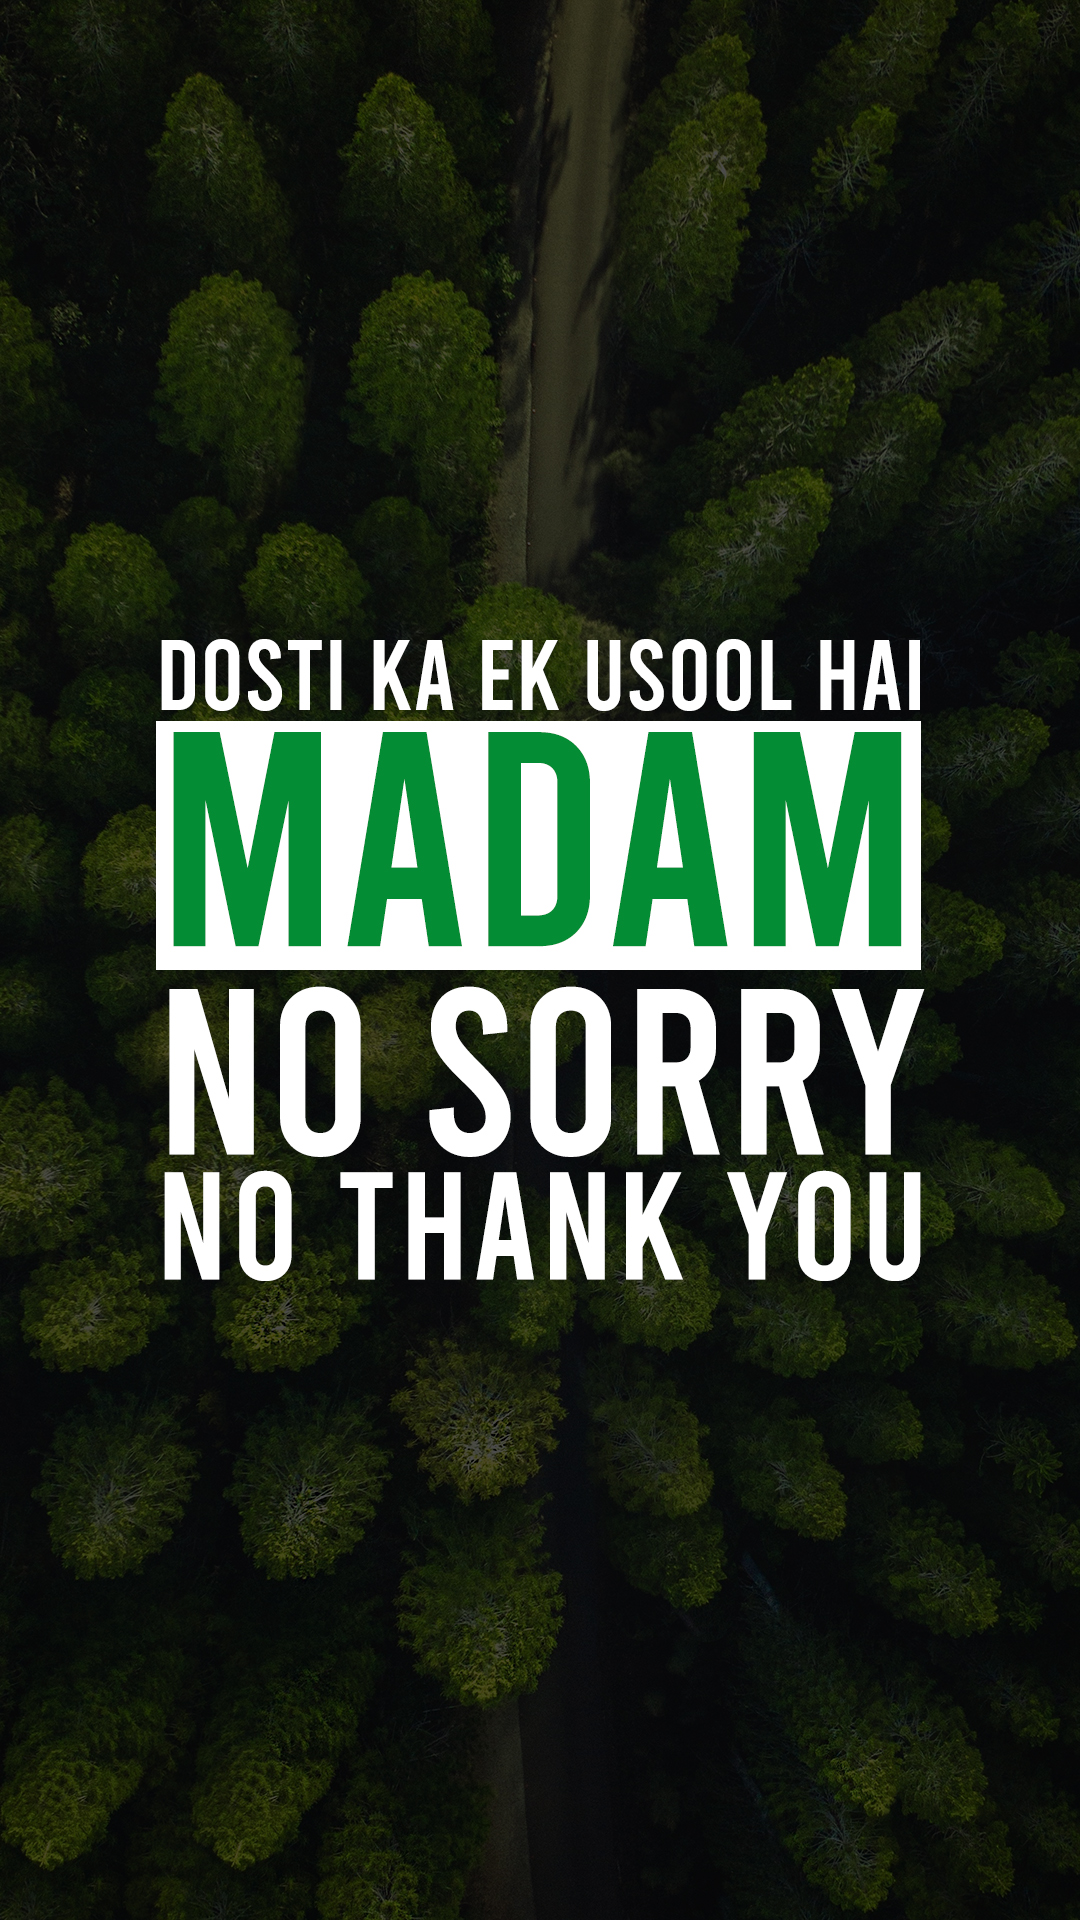 Dosti ka ek usool hai, madam: no sorry, no thank you - Download Mobile  Phone full HD wallpaper